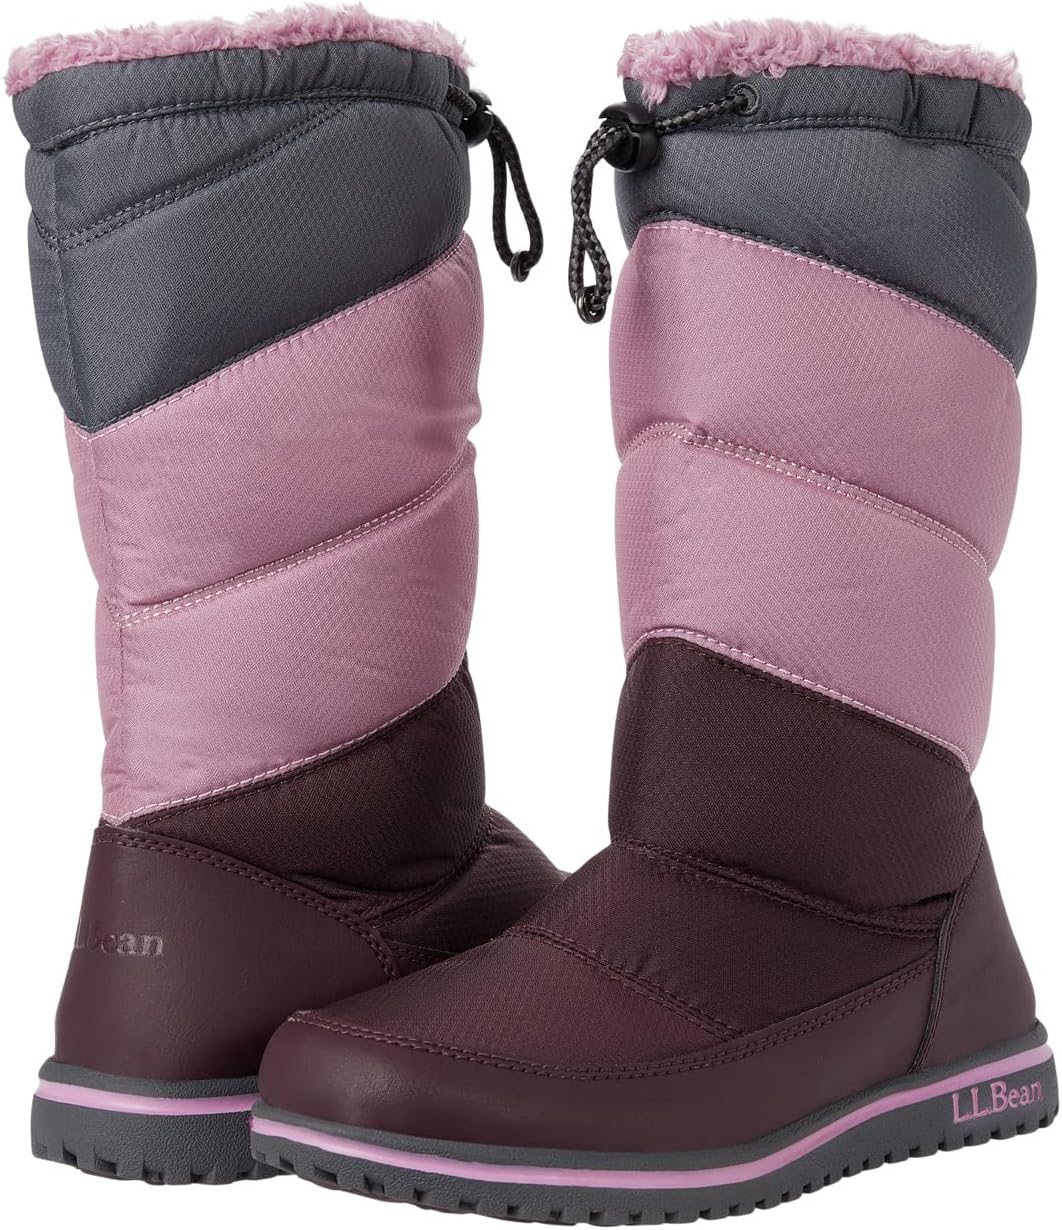 Зимние ботинки Ultralight Water Resistant Snow Boot Tall L.L.Bean, цвет Dark Plum/Mauve Berry напиток газ tango s f dark berry 330 мл ж б